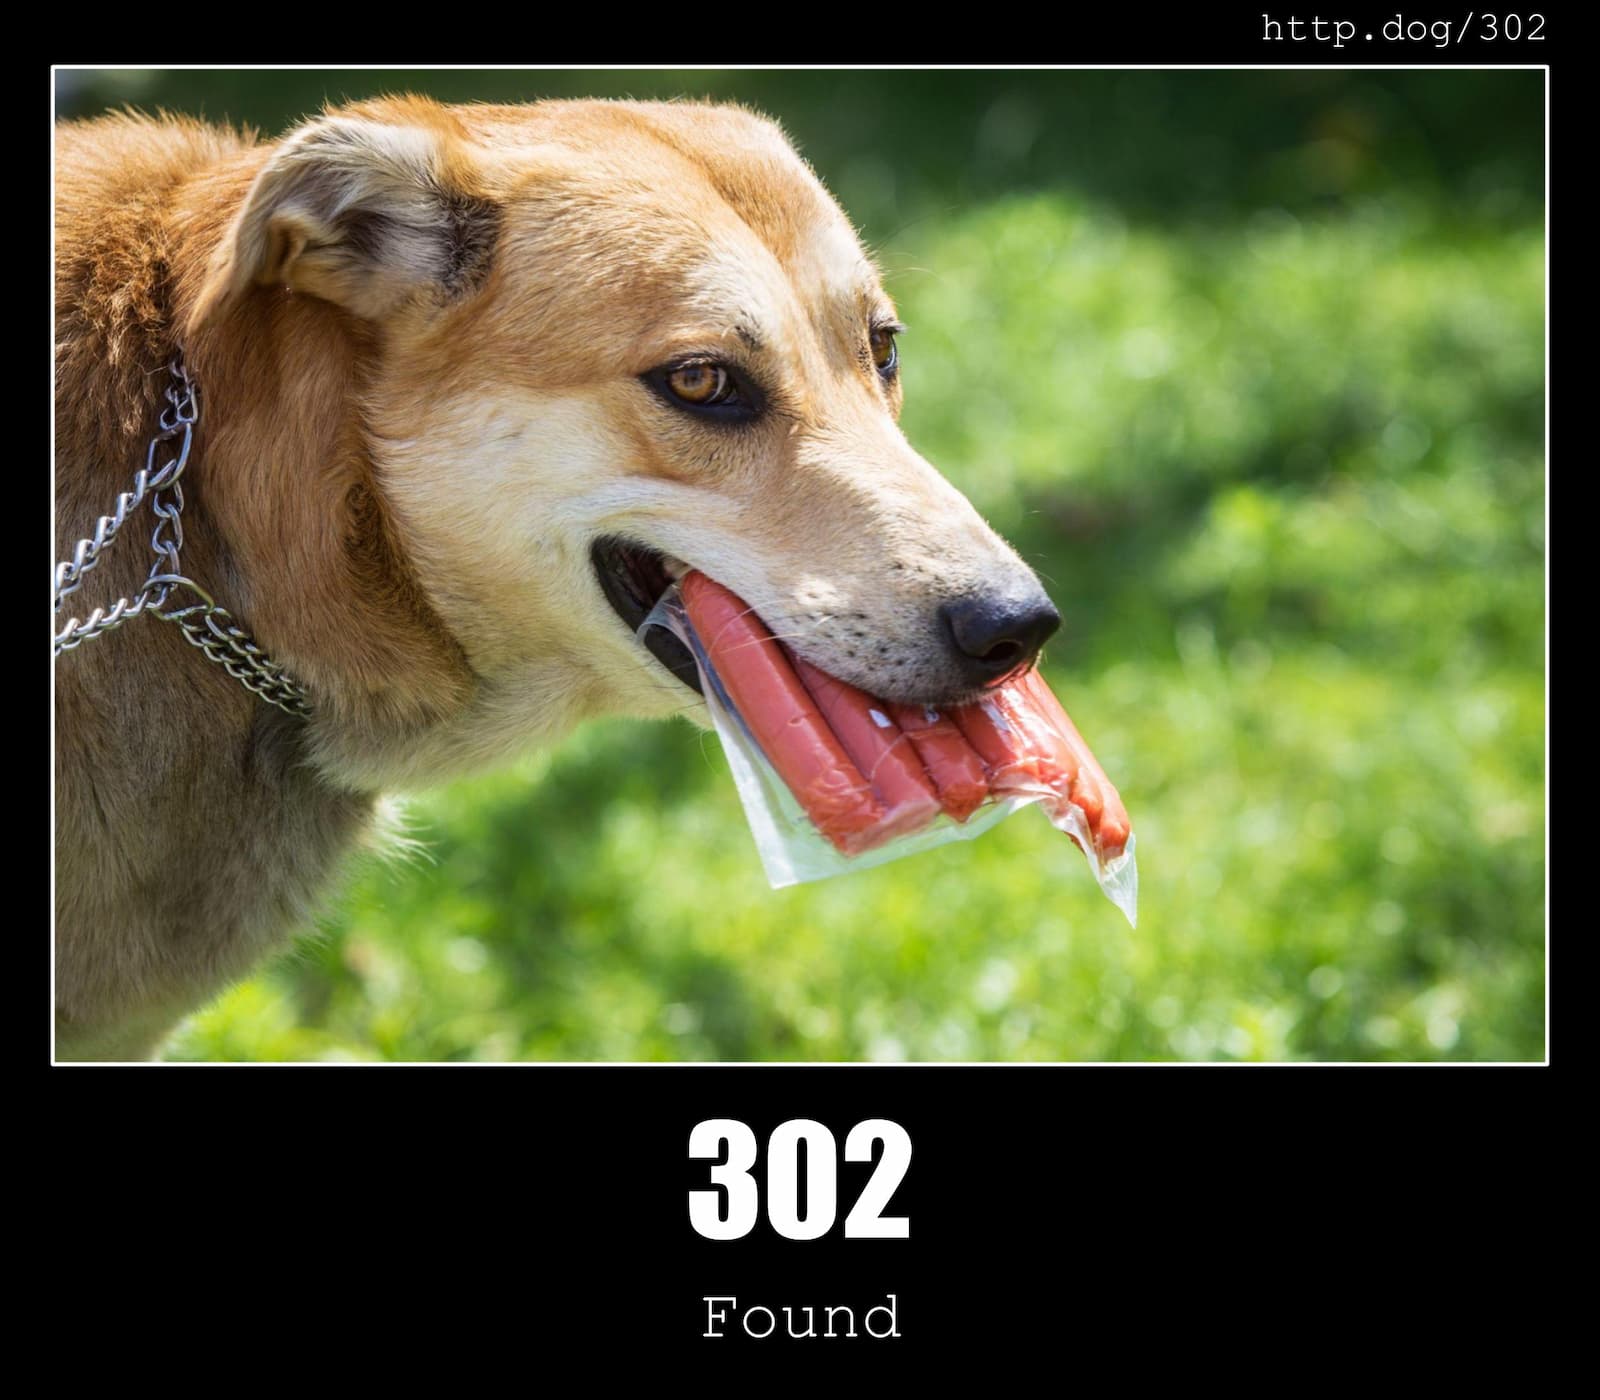 HTTP Status Code 302 Found & Dogs